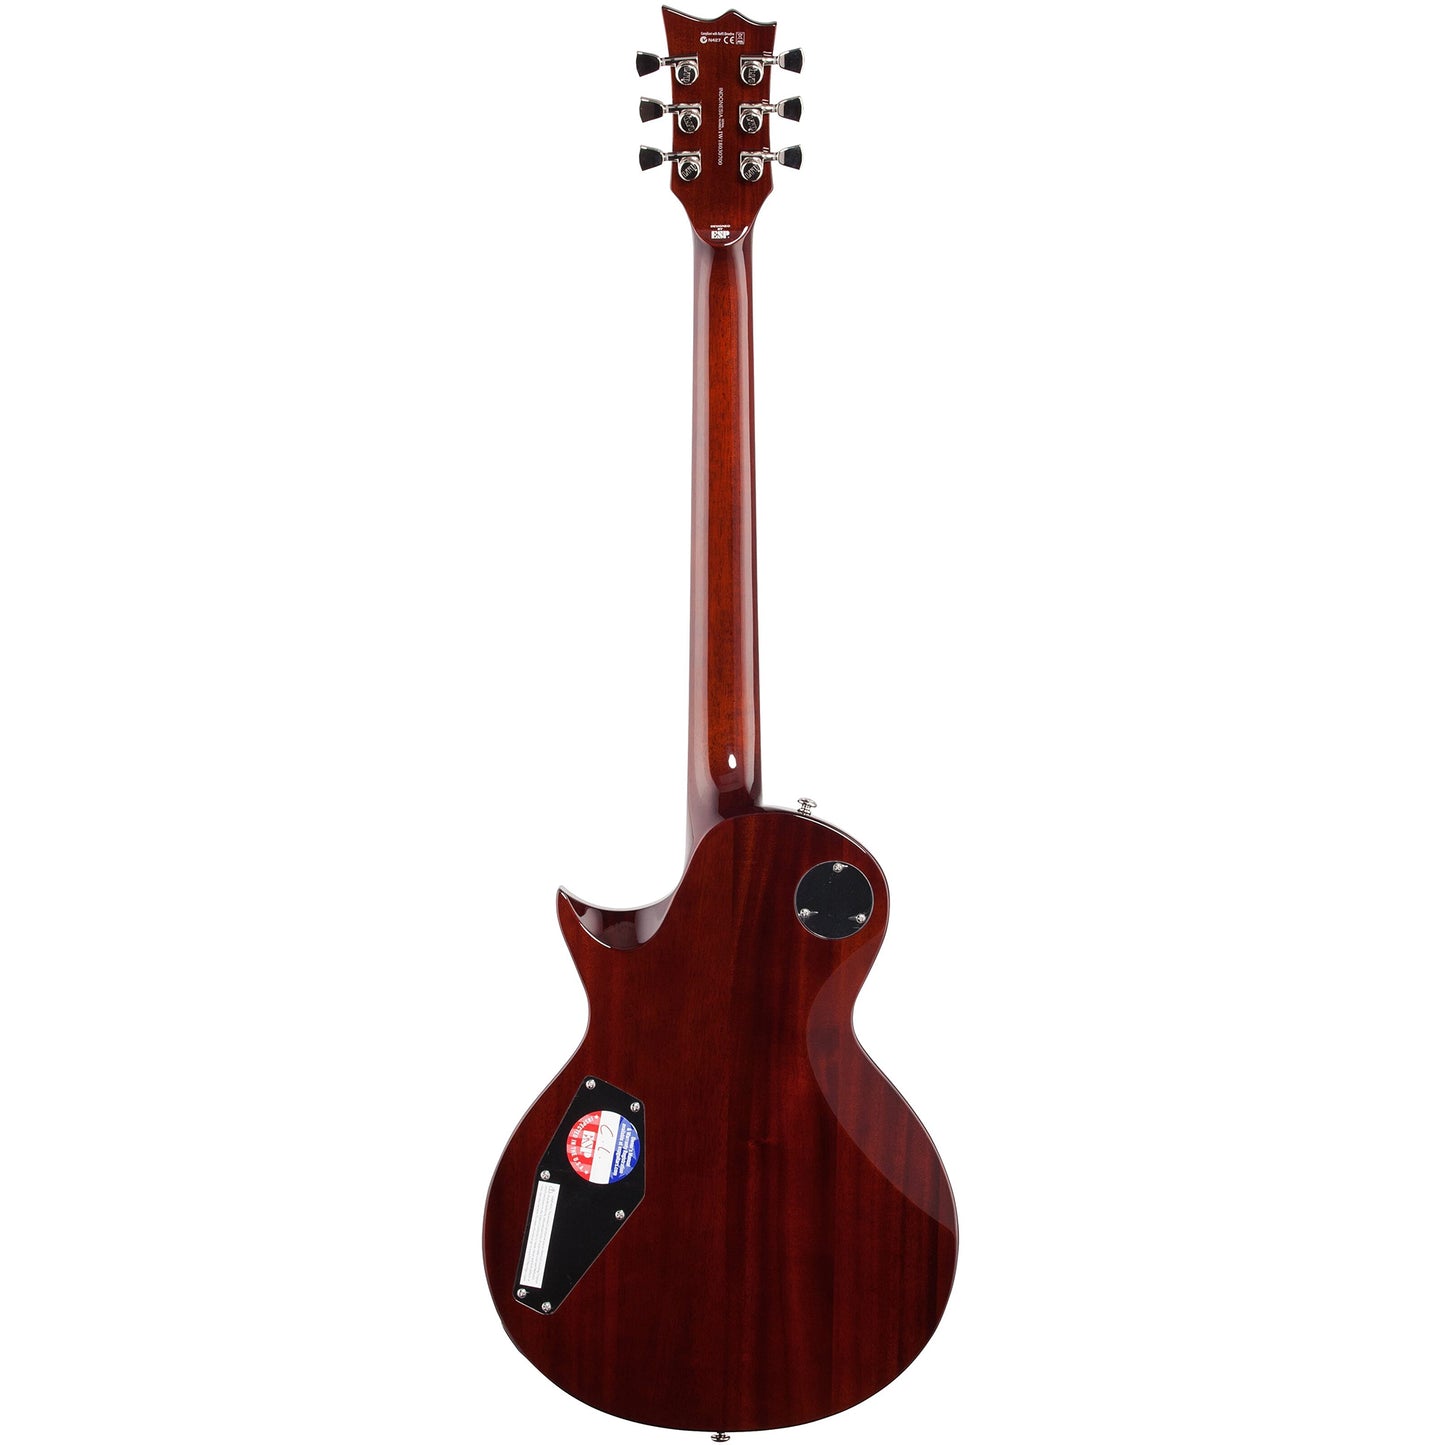 ESP LTD EC-1000 Electric Guitar - Amber Sunburst